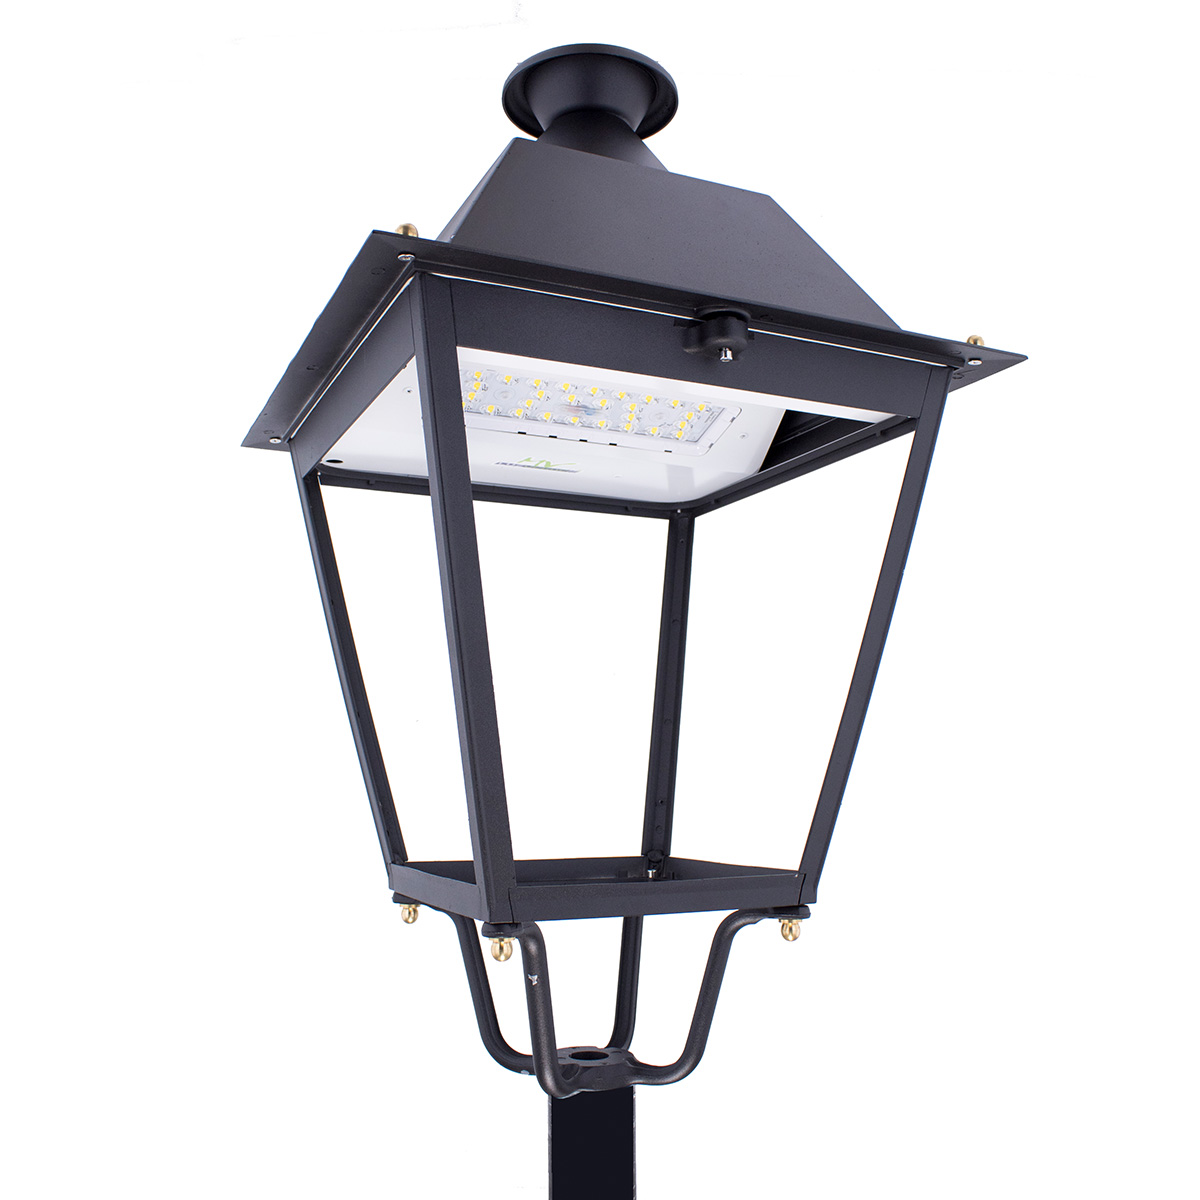 Chinese suppliers Victoria outdoor garden aluminum lamp pole lights